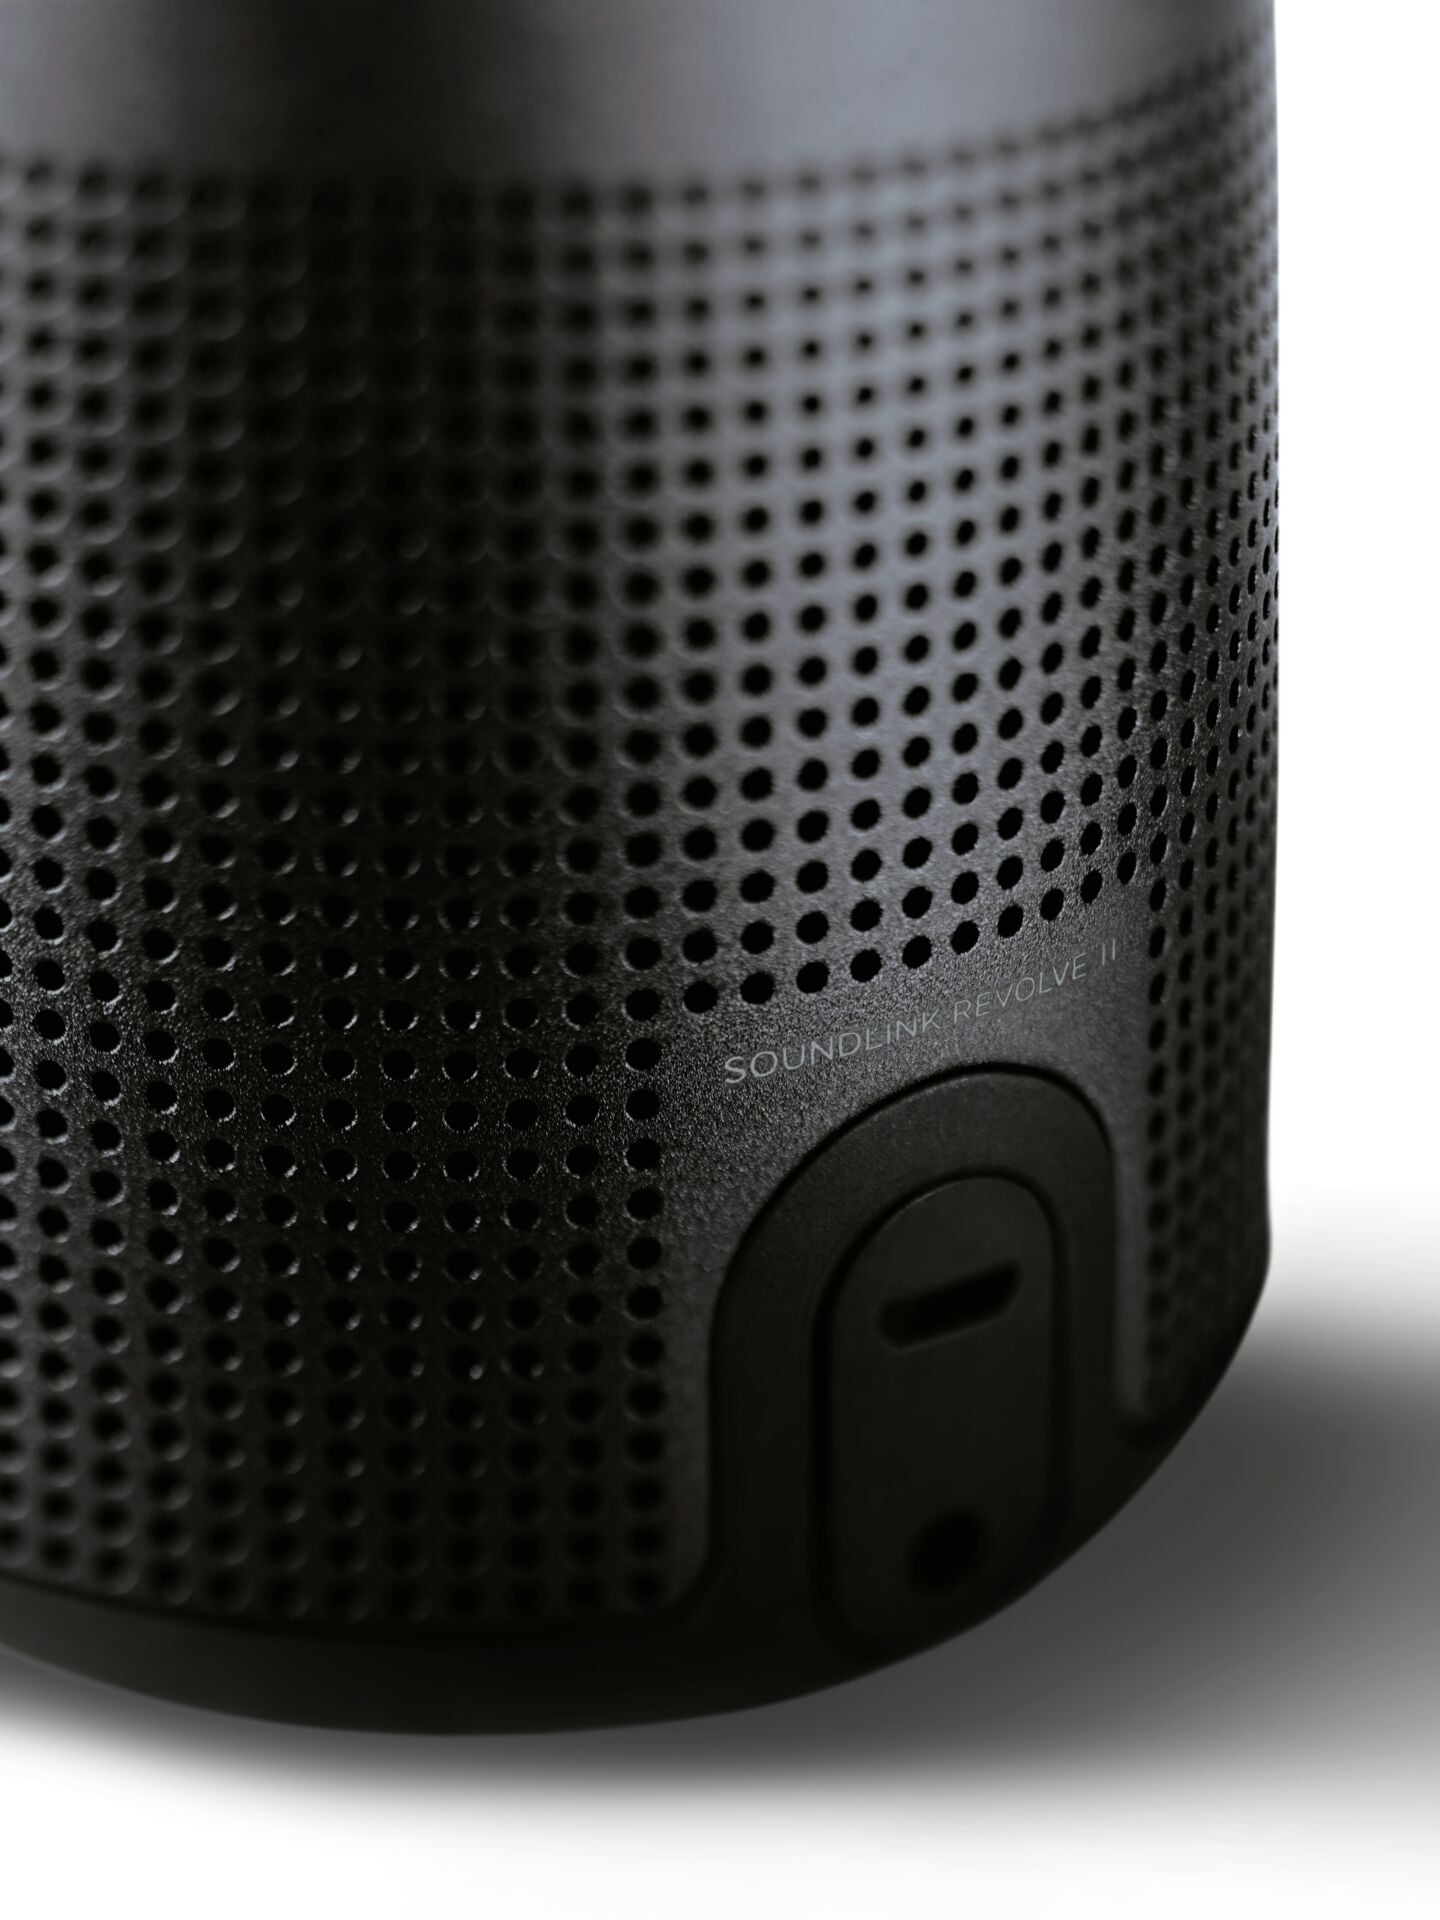 Bose SoundLink Revolve Wireless Portable Bluetooth Speaker (Series